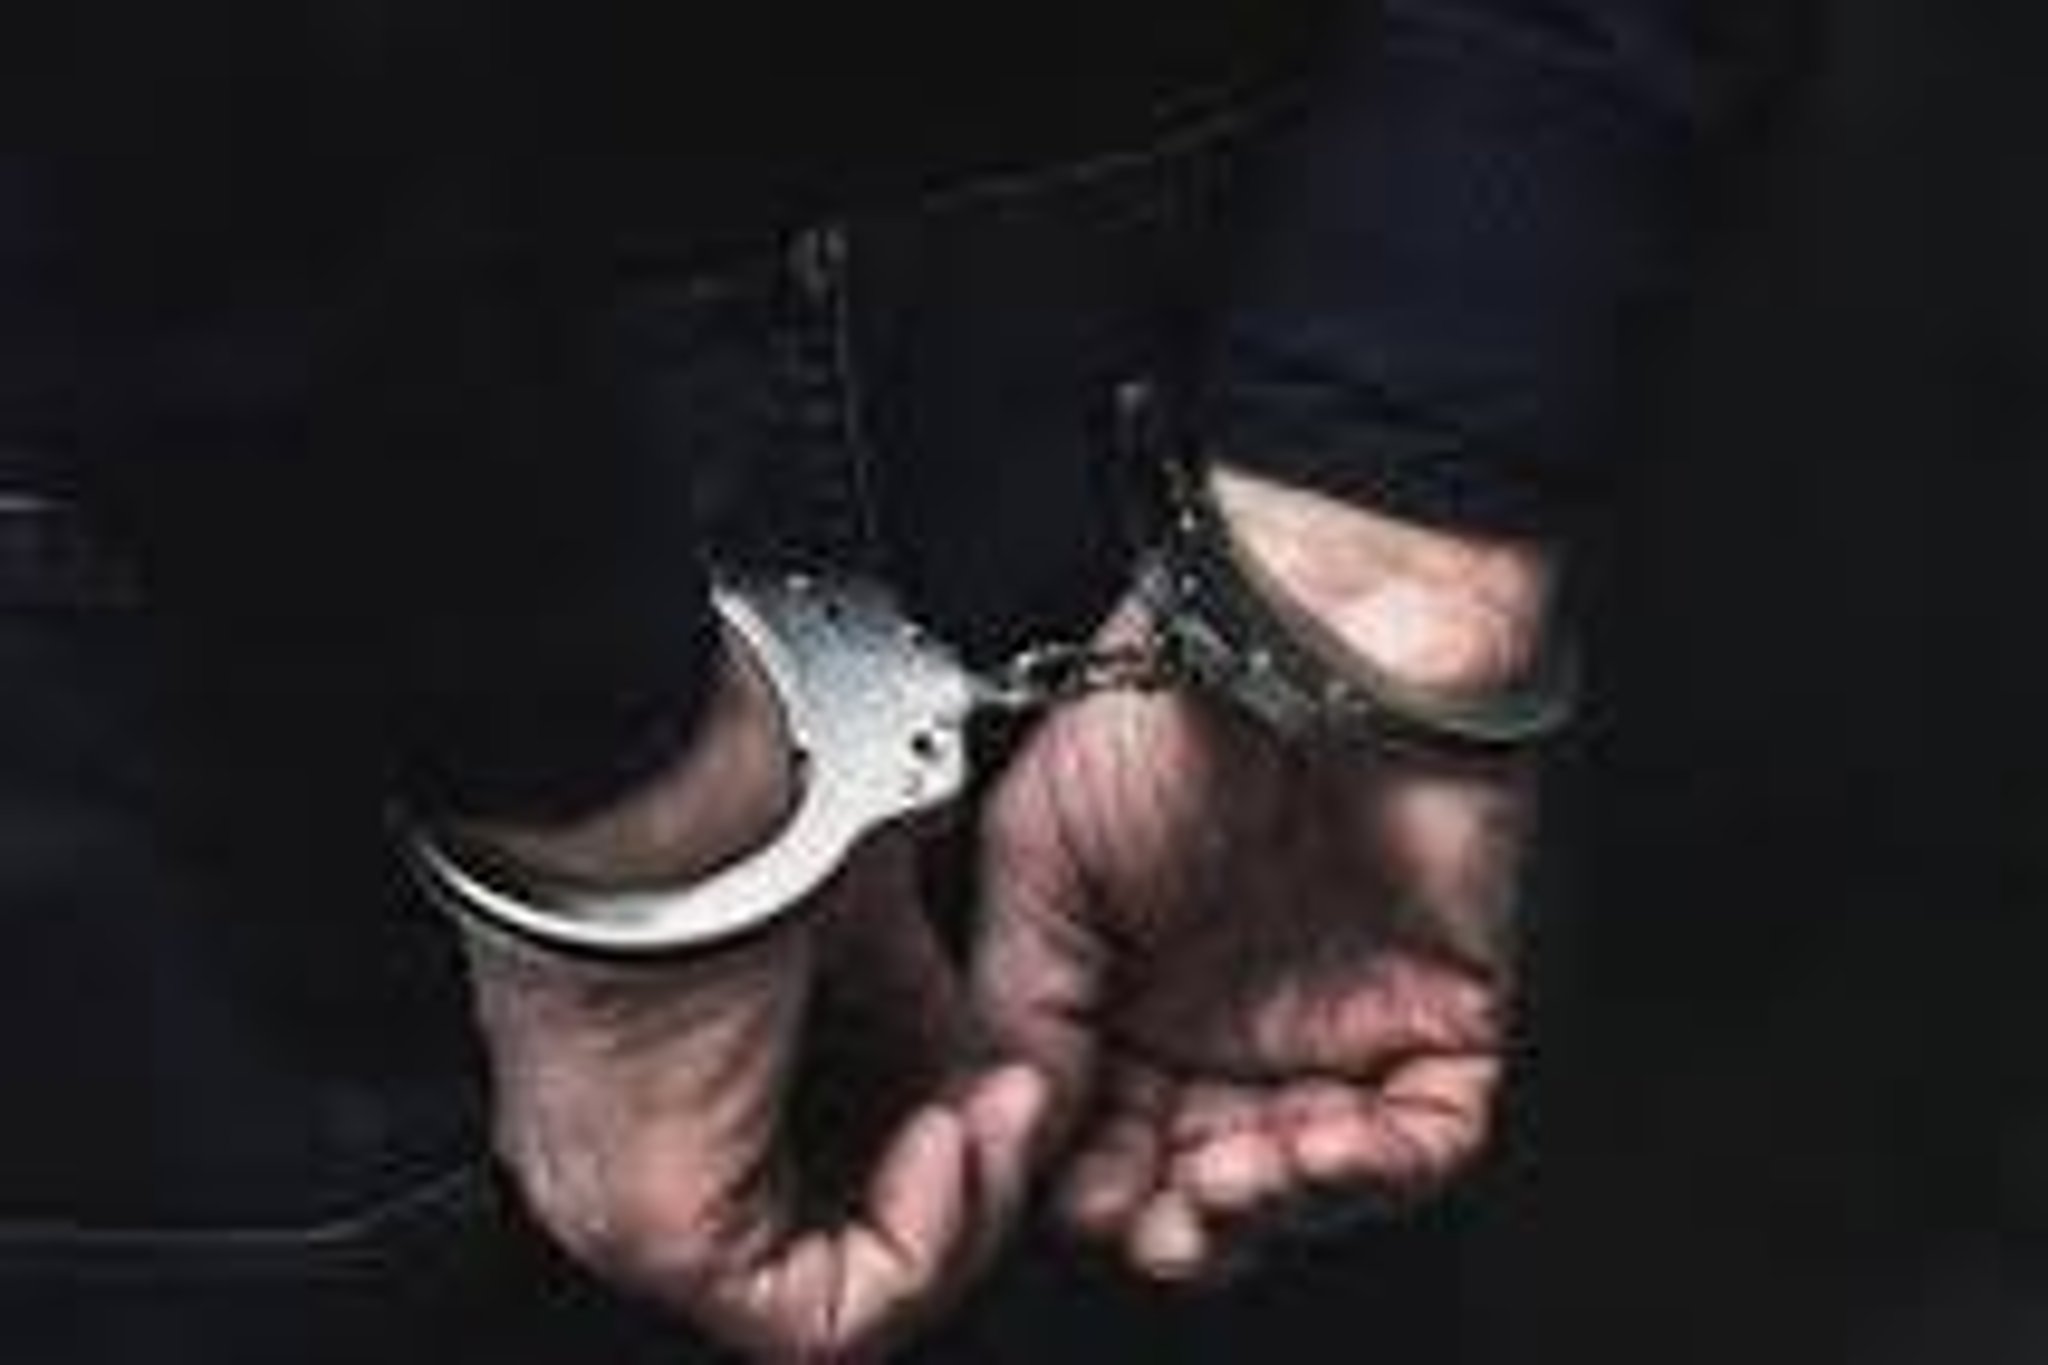 Four men arrested under Terrorism Act in Óglaigh na hÉireann probe